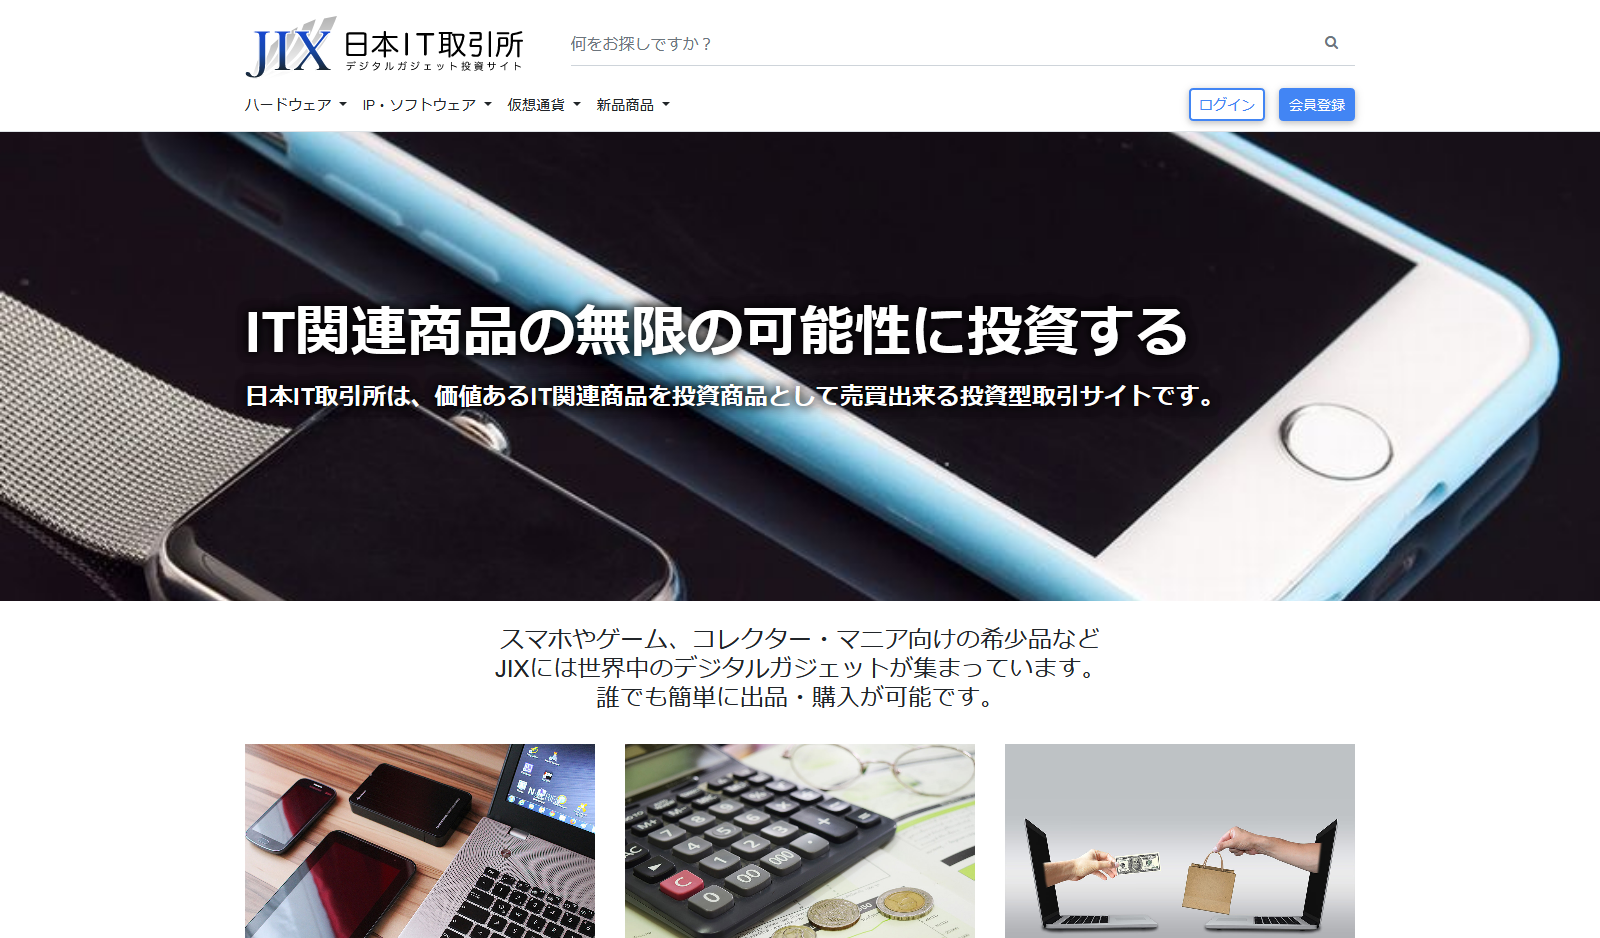 JIX-日本IT取引所 - デジタルガジェット投資サイト